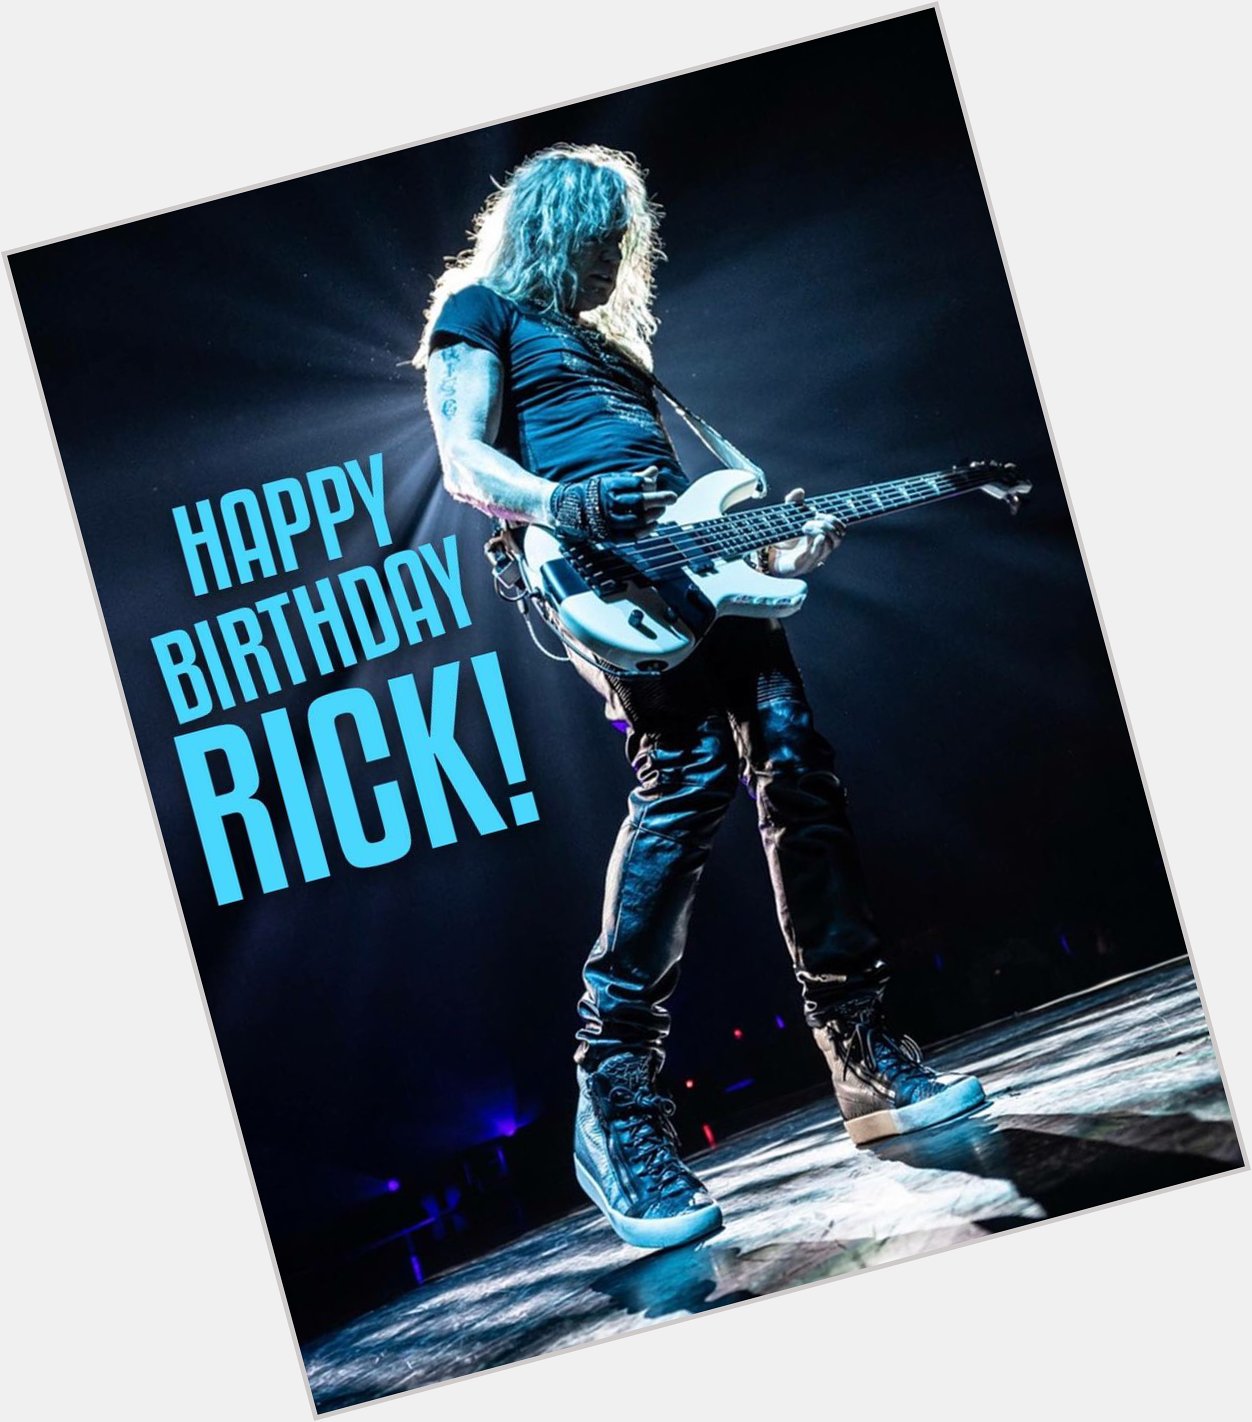   Happy Birthday 
Rick Savage
Bass Player
Born December  2, 1960 